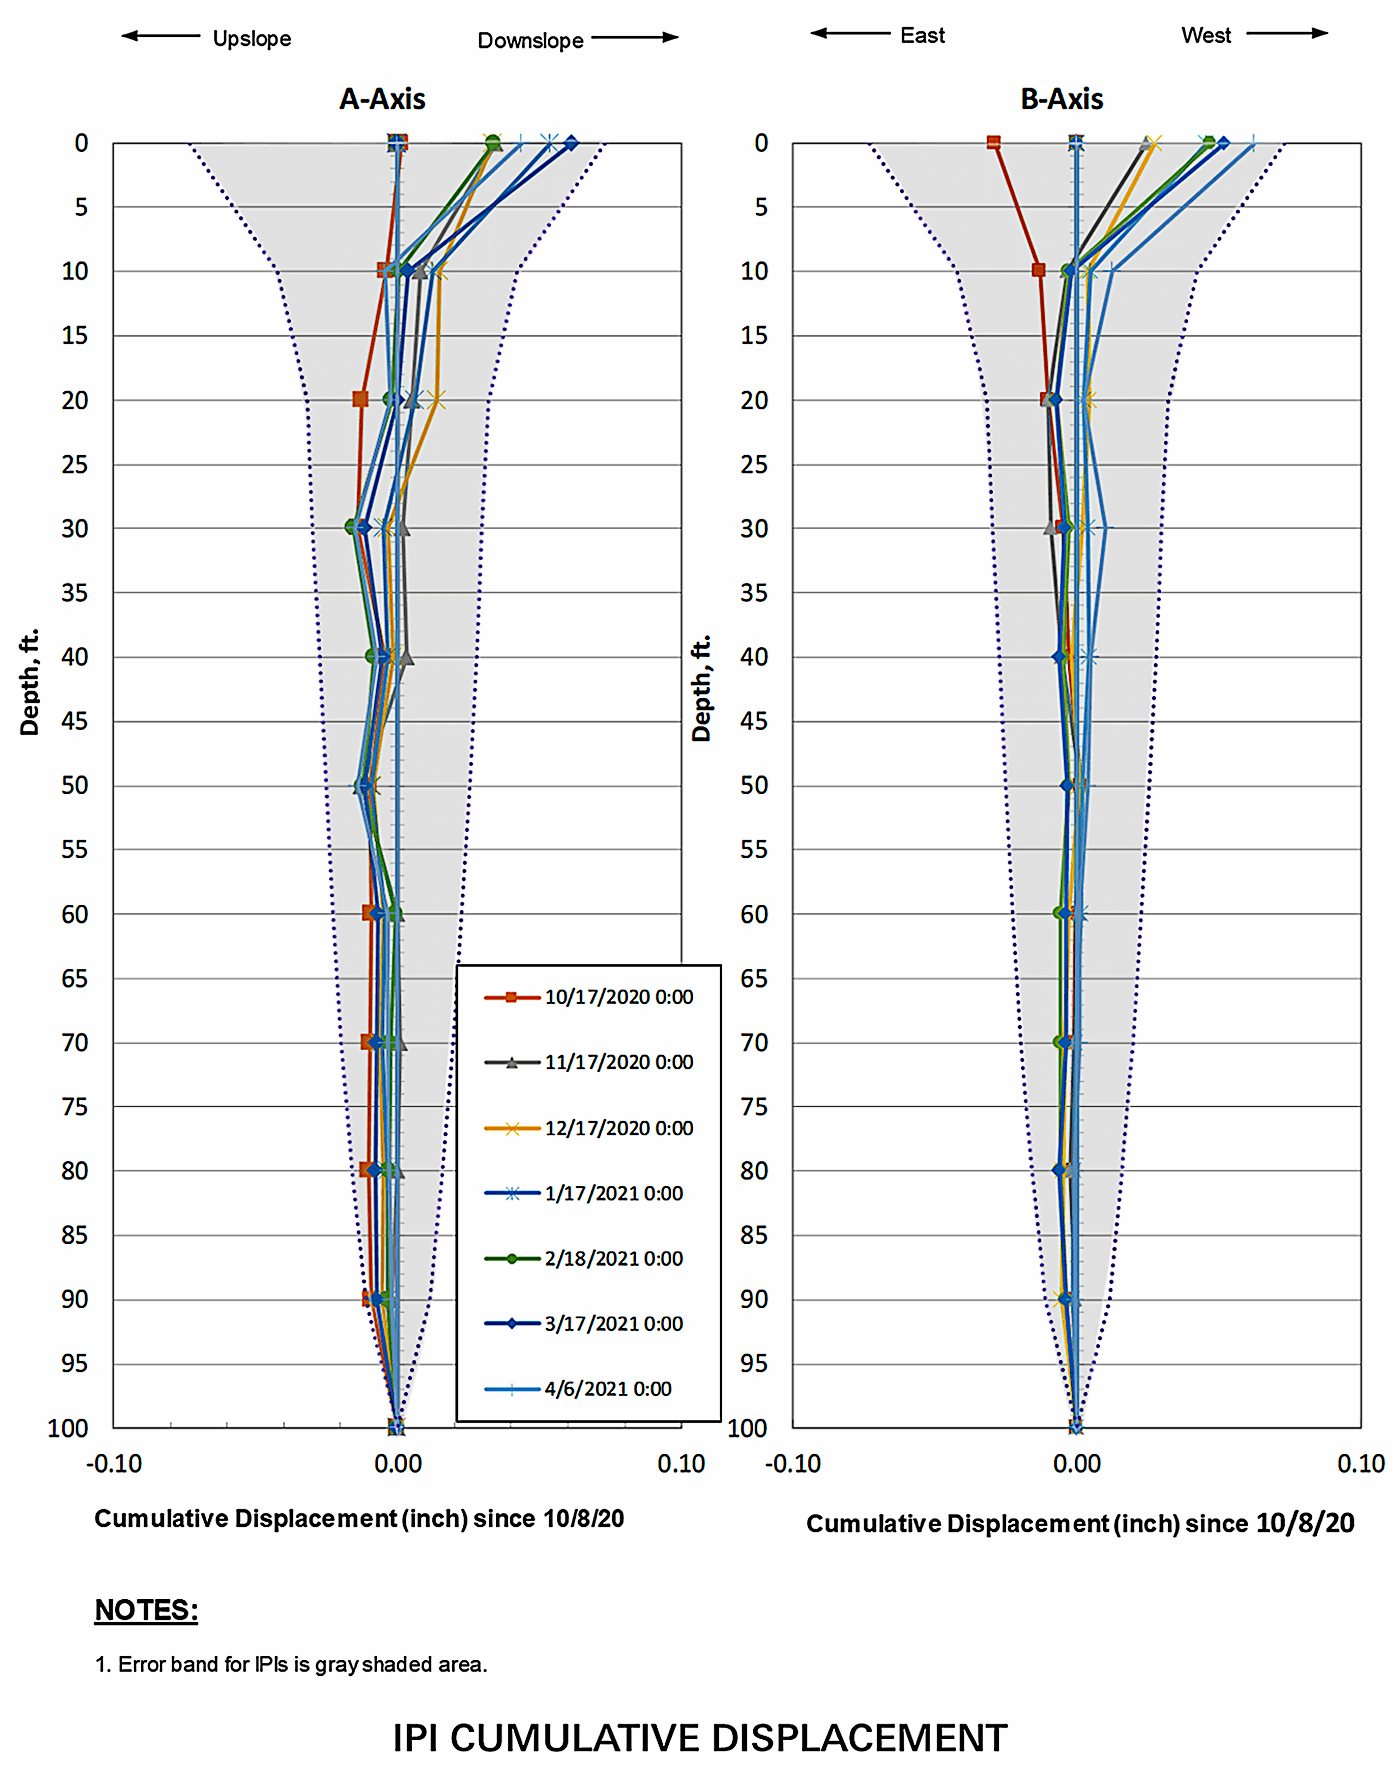 Image of plot showing IPI cumulative displacement